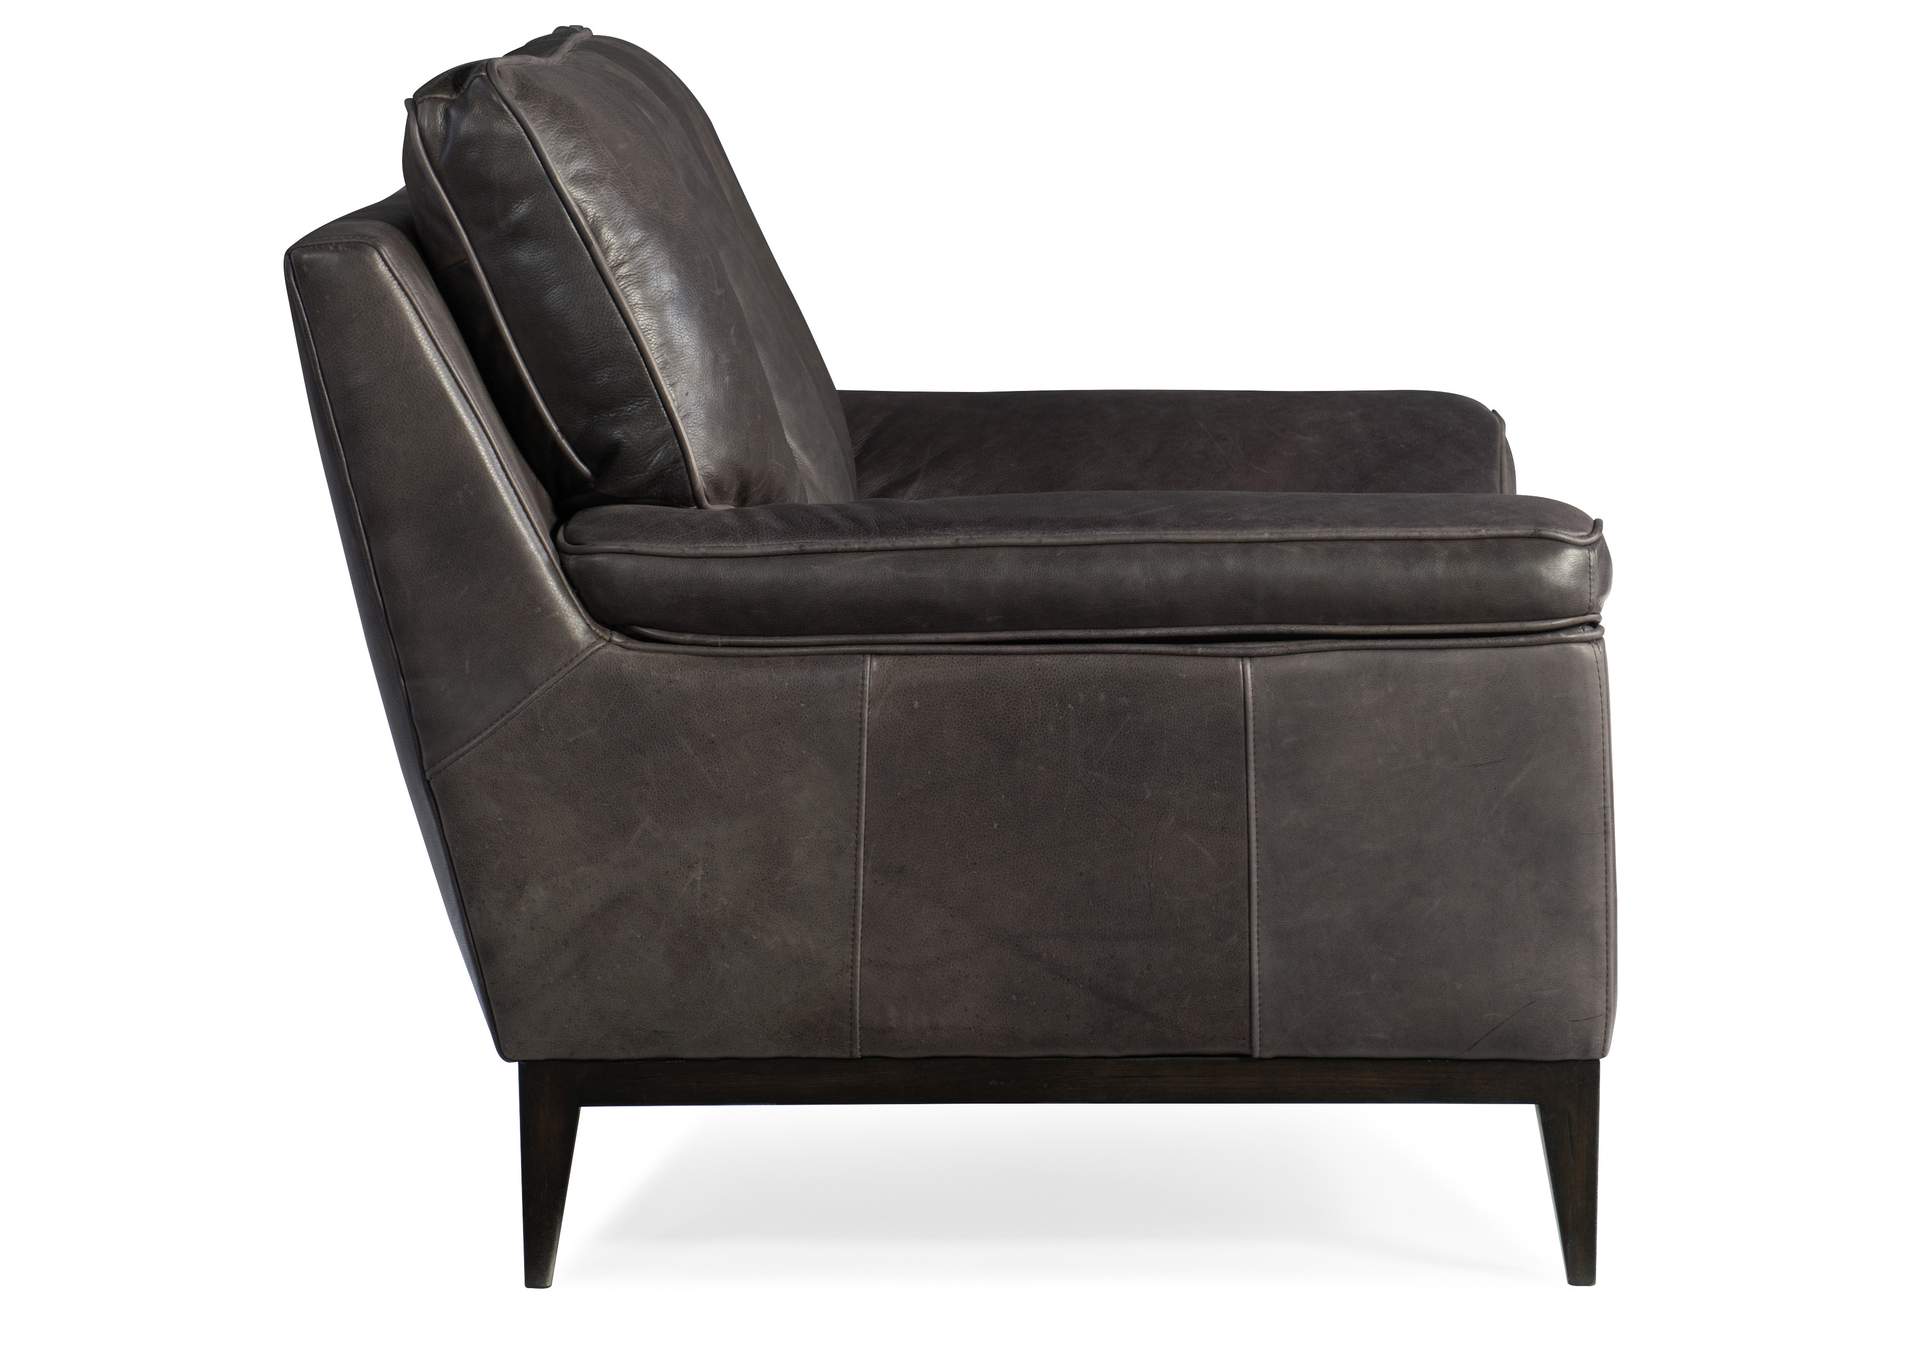 Kandor Leather Stationary Chair,Hooker Furniture